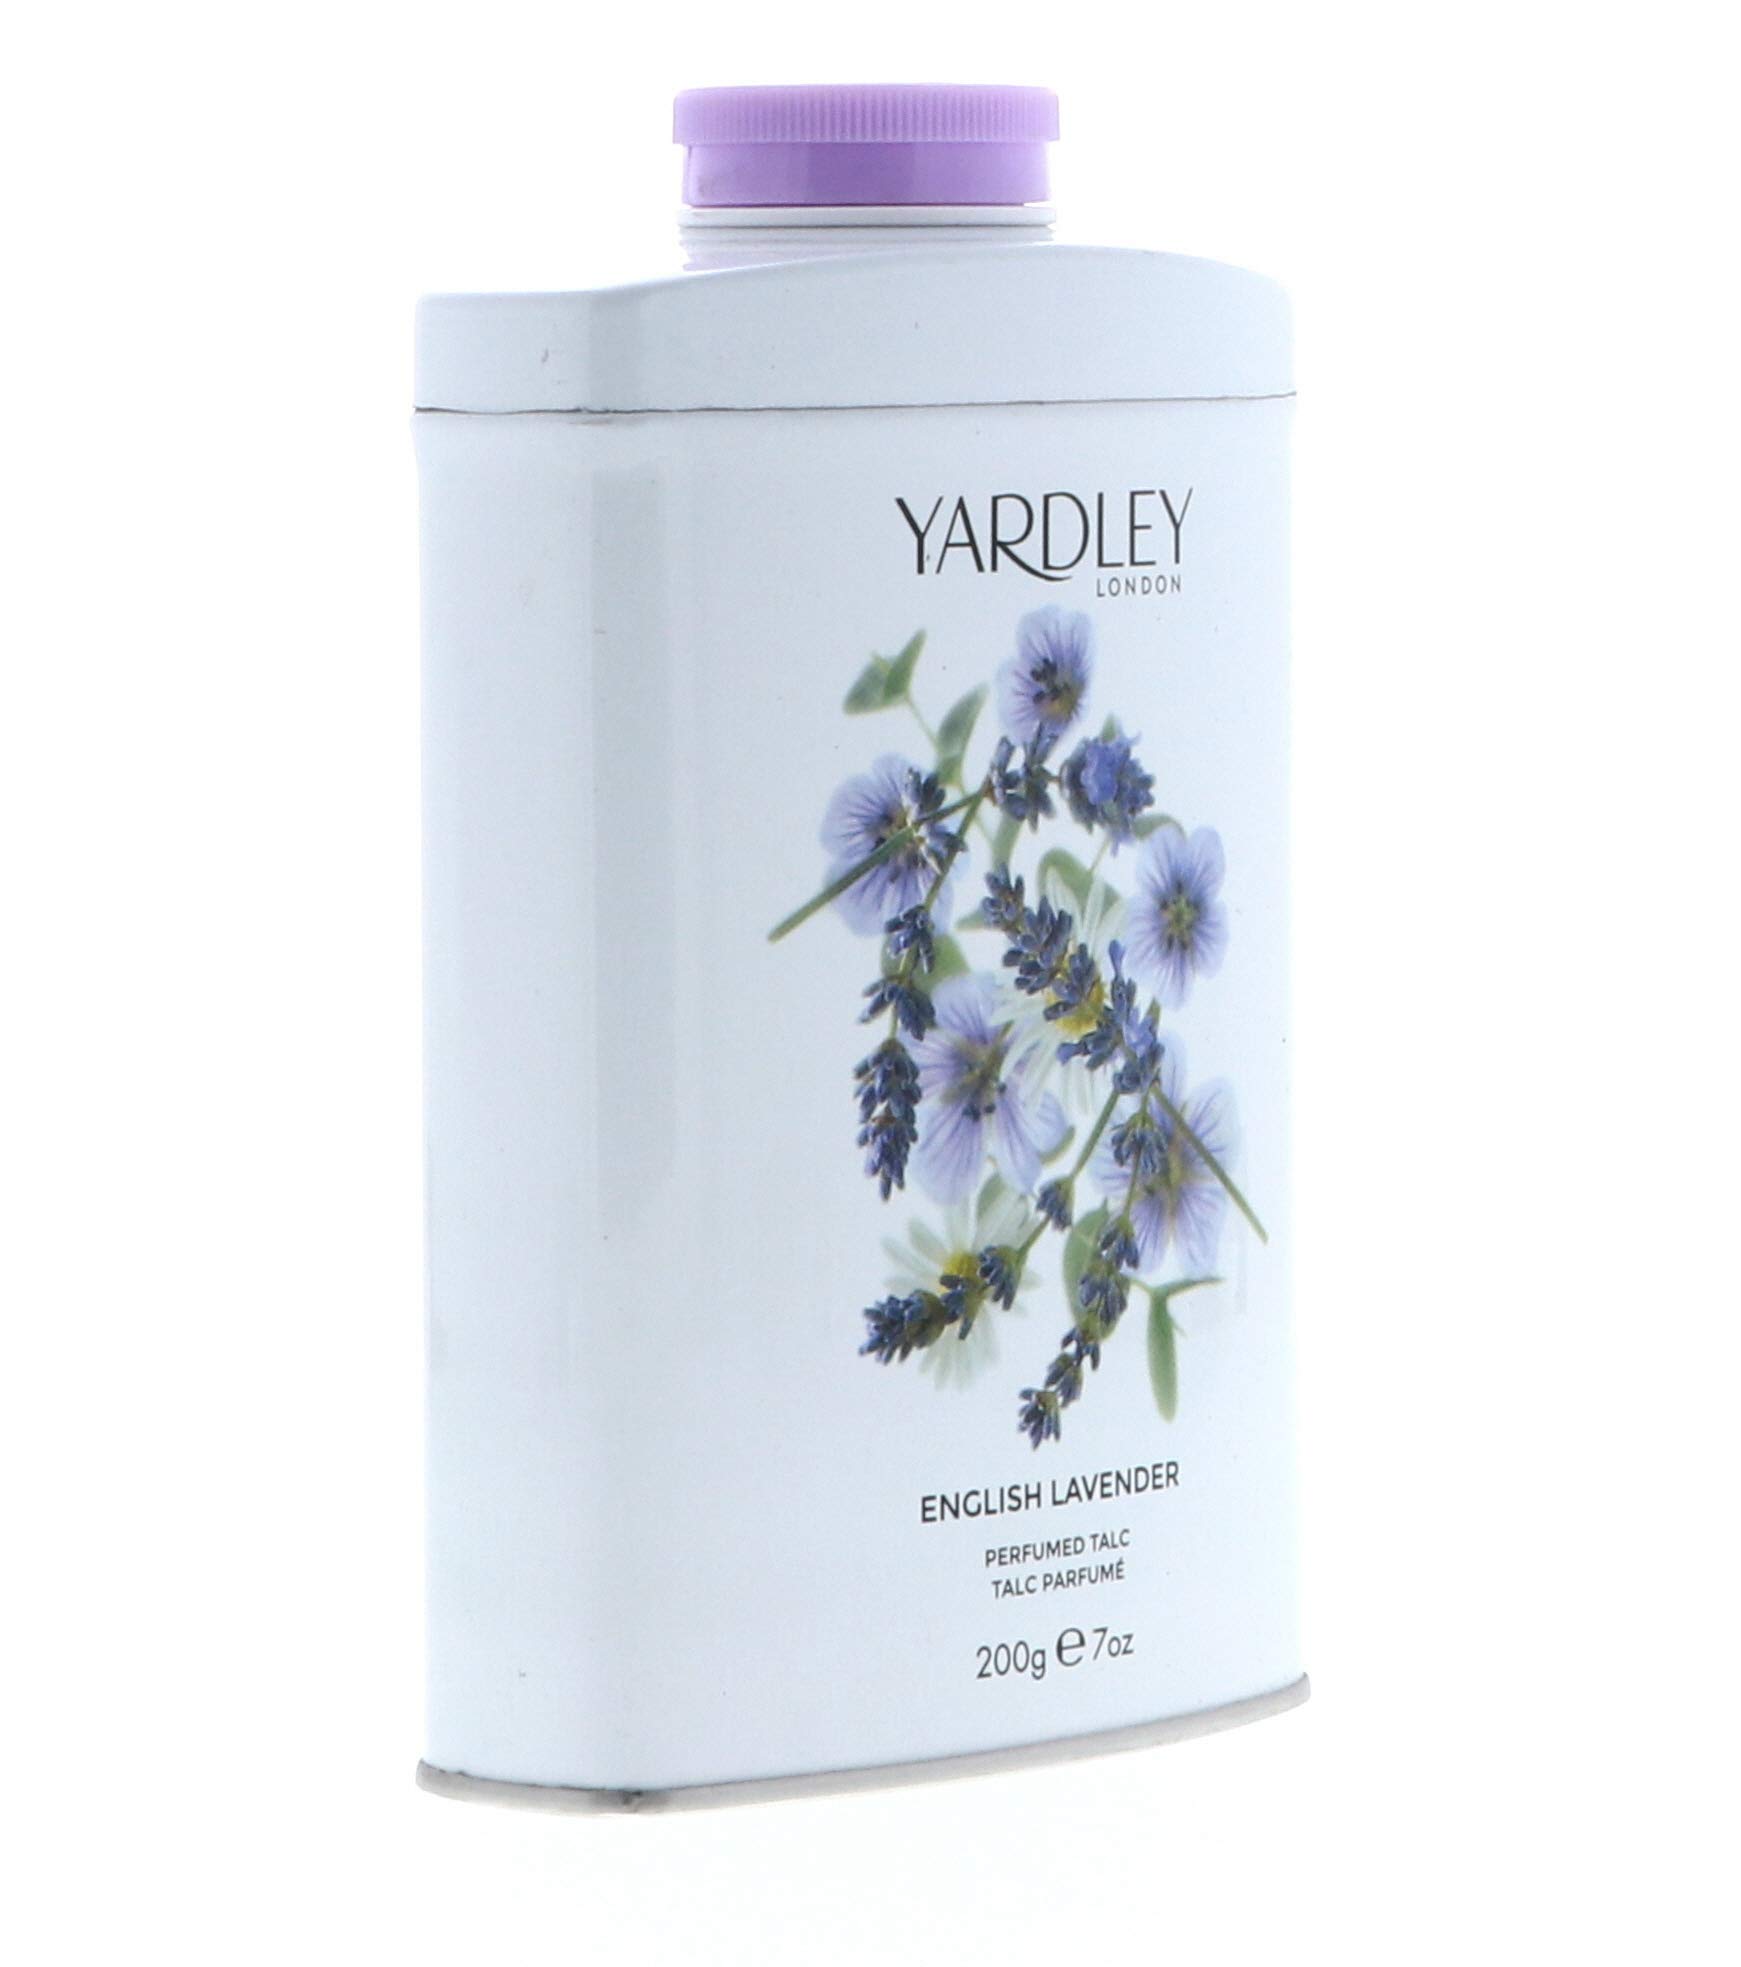 Yardley of London English Lavender Perfumed Talc, 7 Oz, Made in England - NEW FORMULA